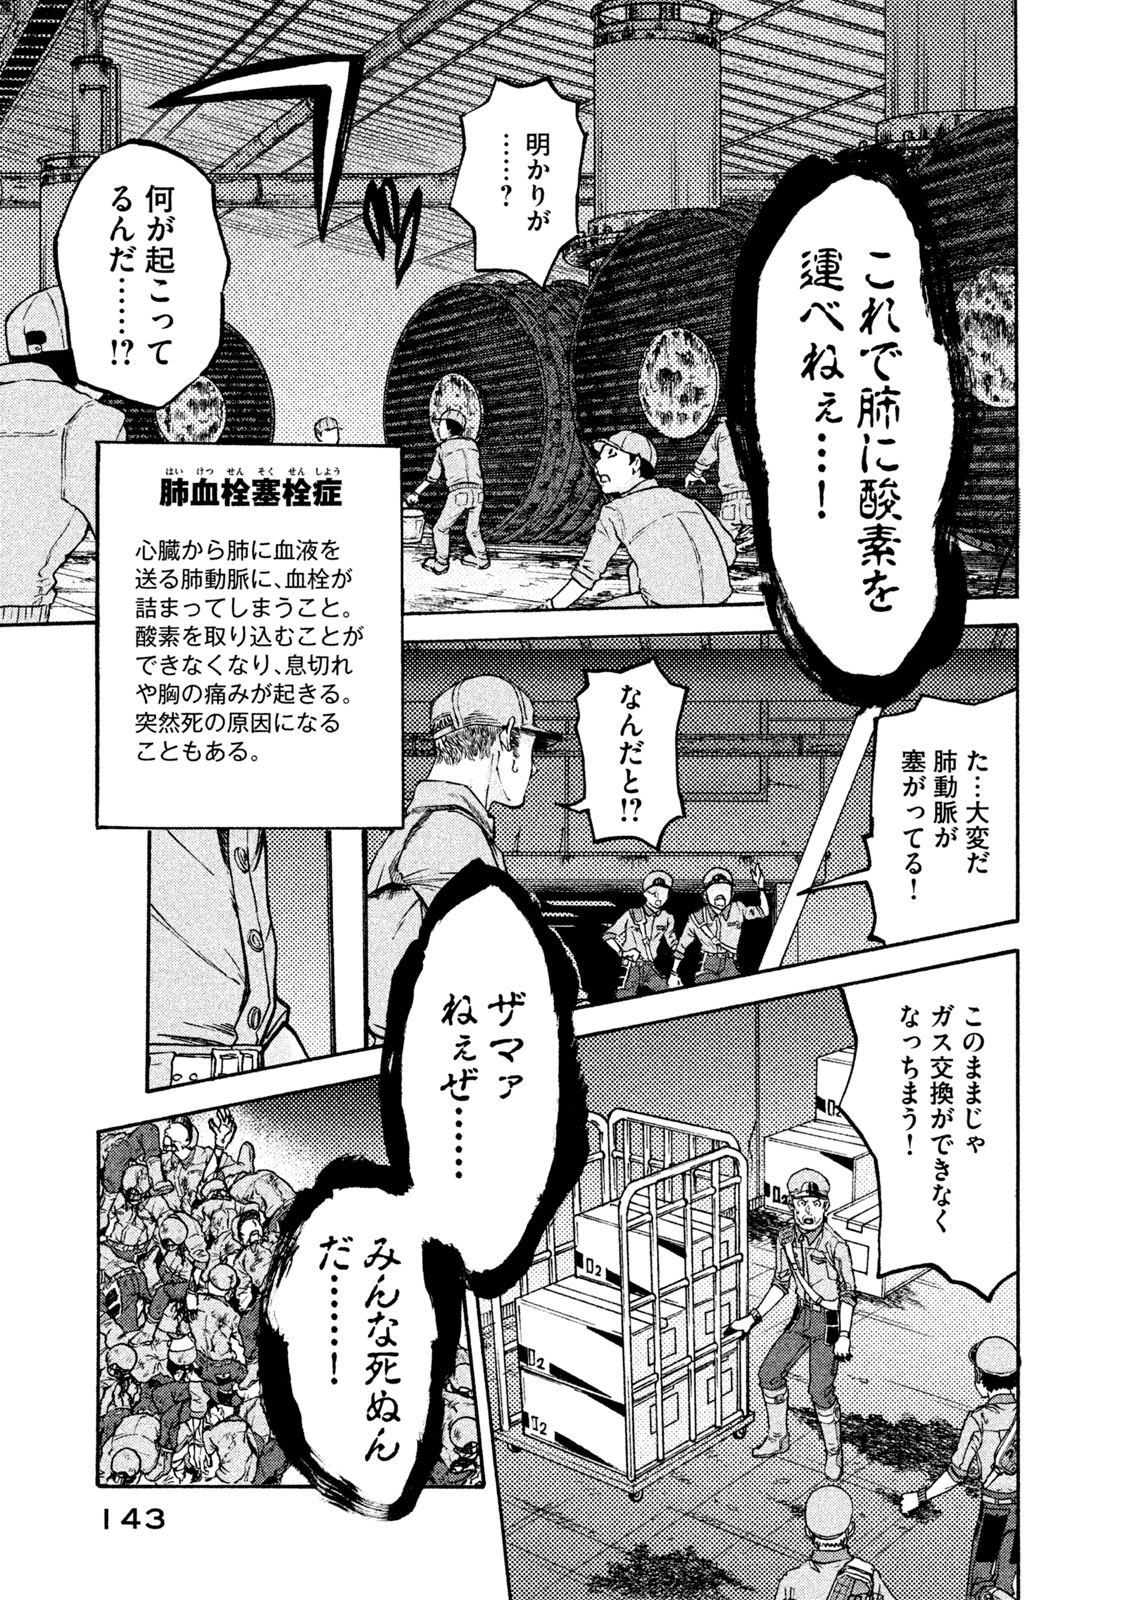 Hataraku Saibou BLACK - Chapter 17 - Page 7